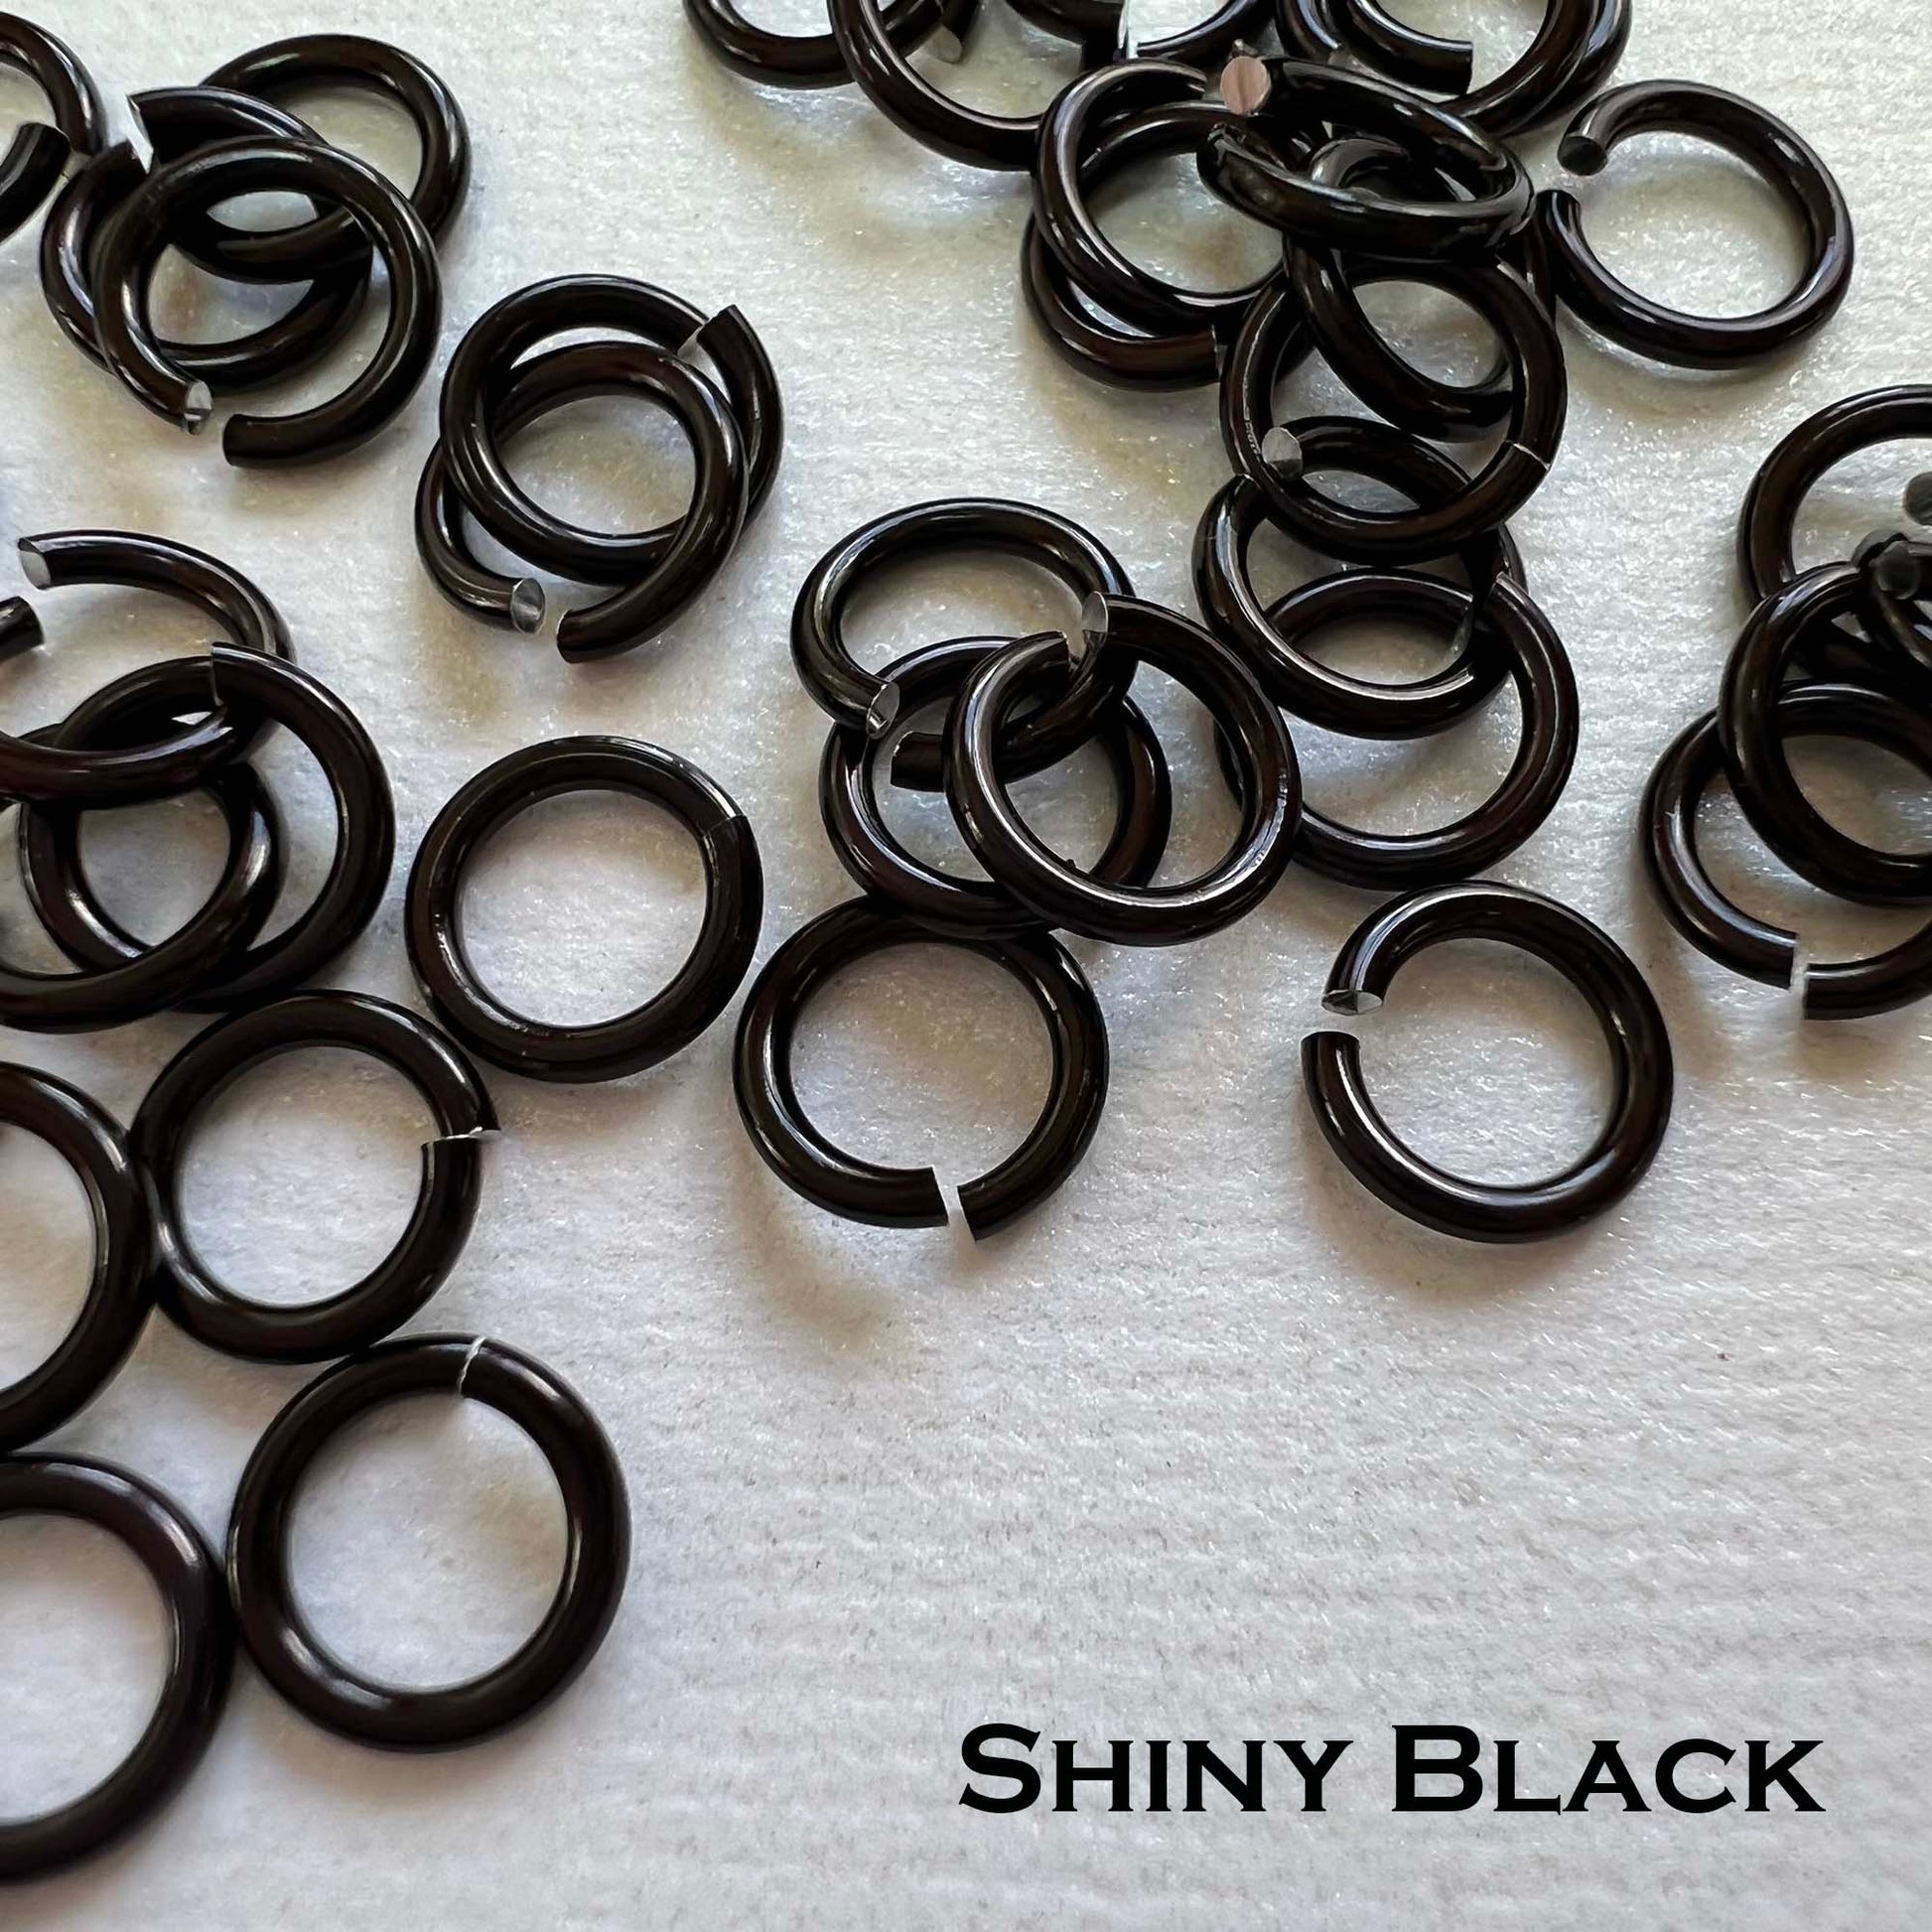 10mm Shiny Black Nite Open Jump Rings